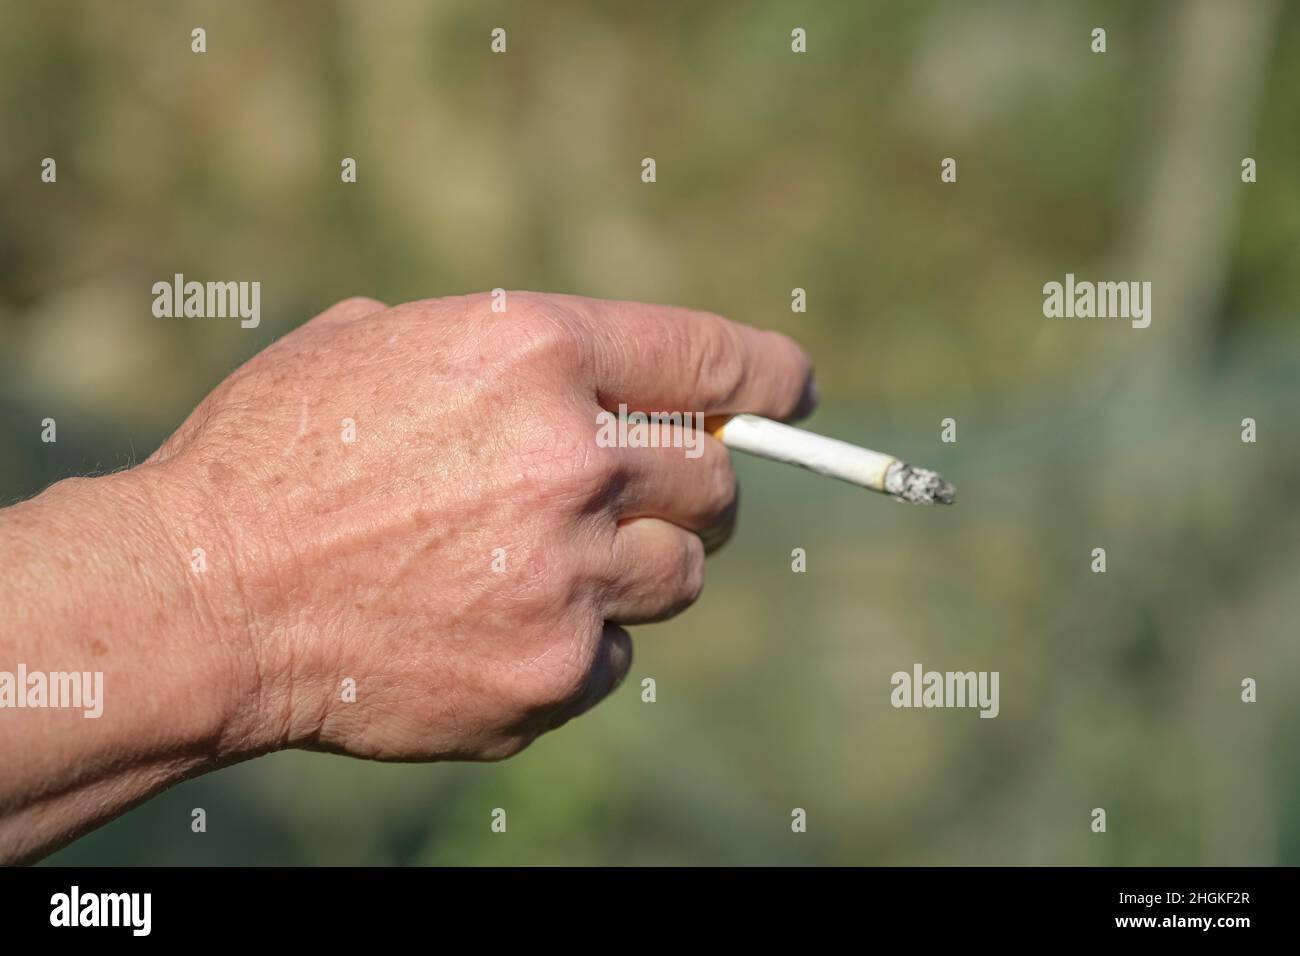 Elderly woman hold burning cigarette while smoking,tobacco smoke,unhealthy skin damage lifestyle Stock Photo